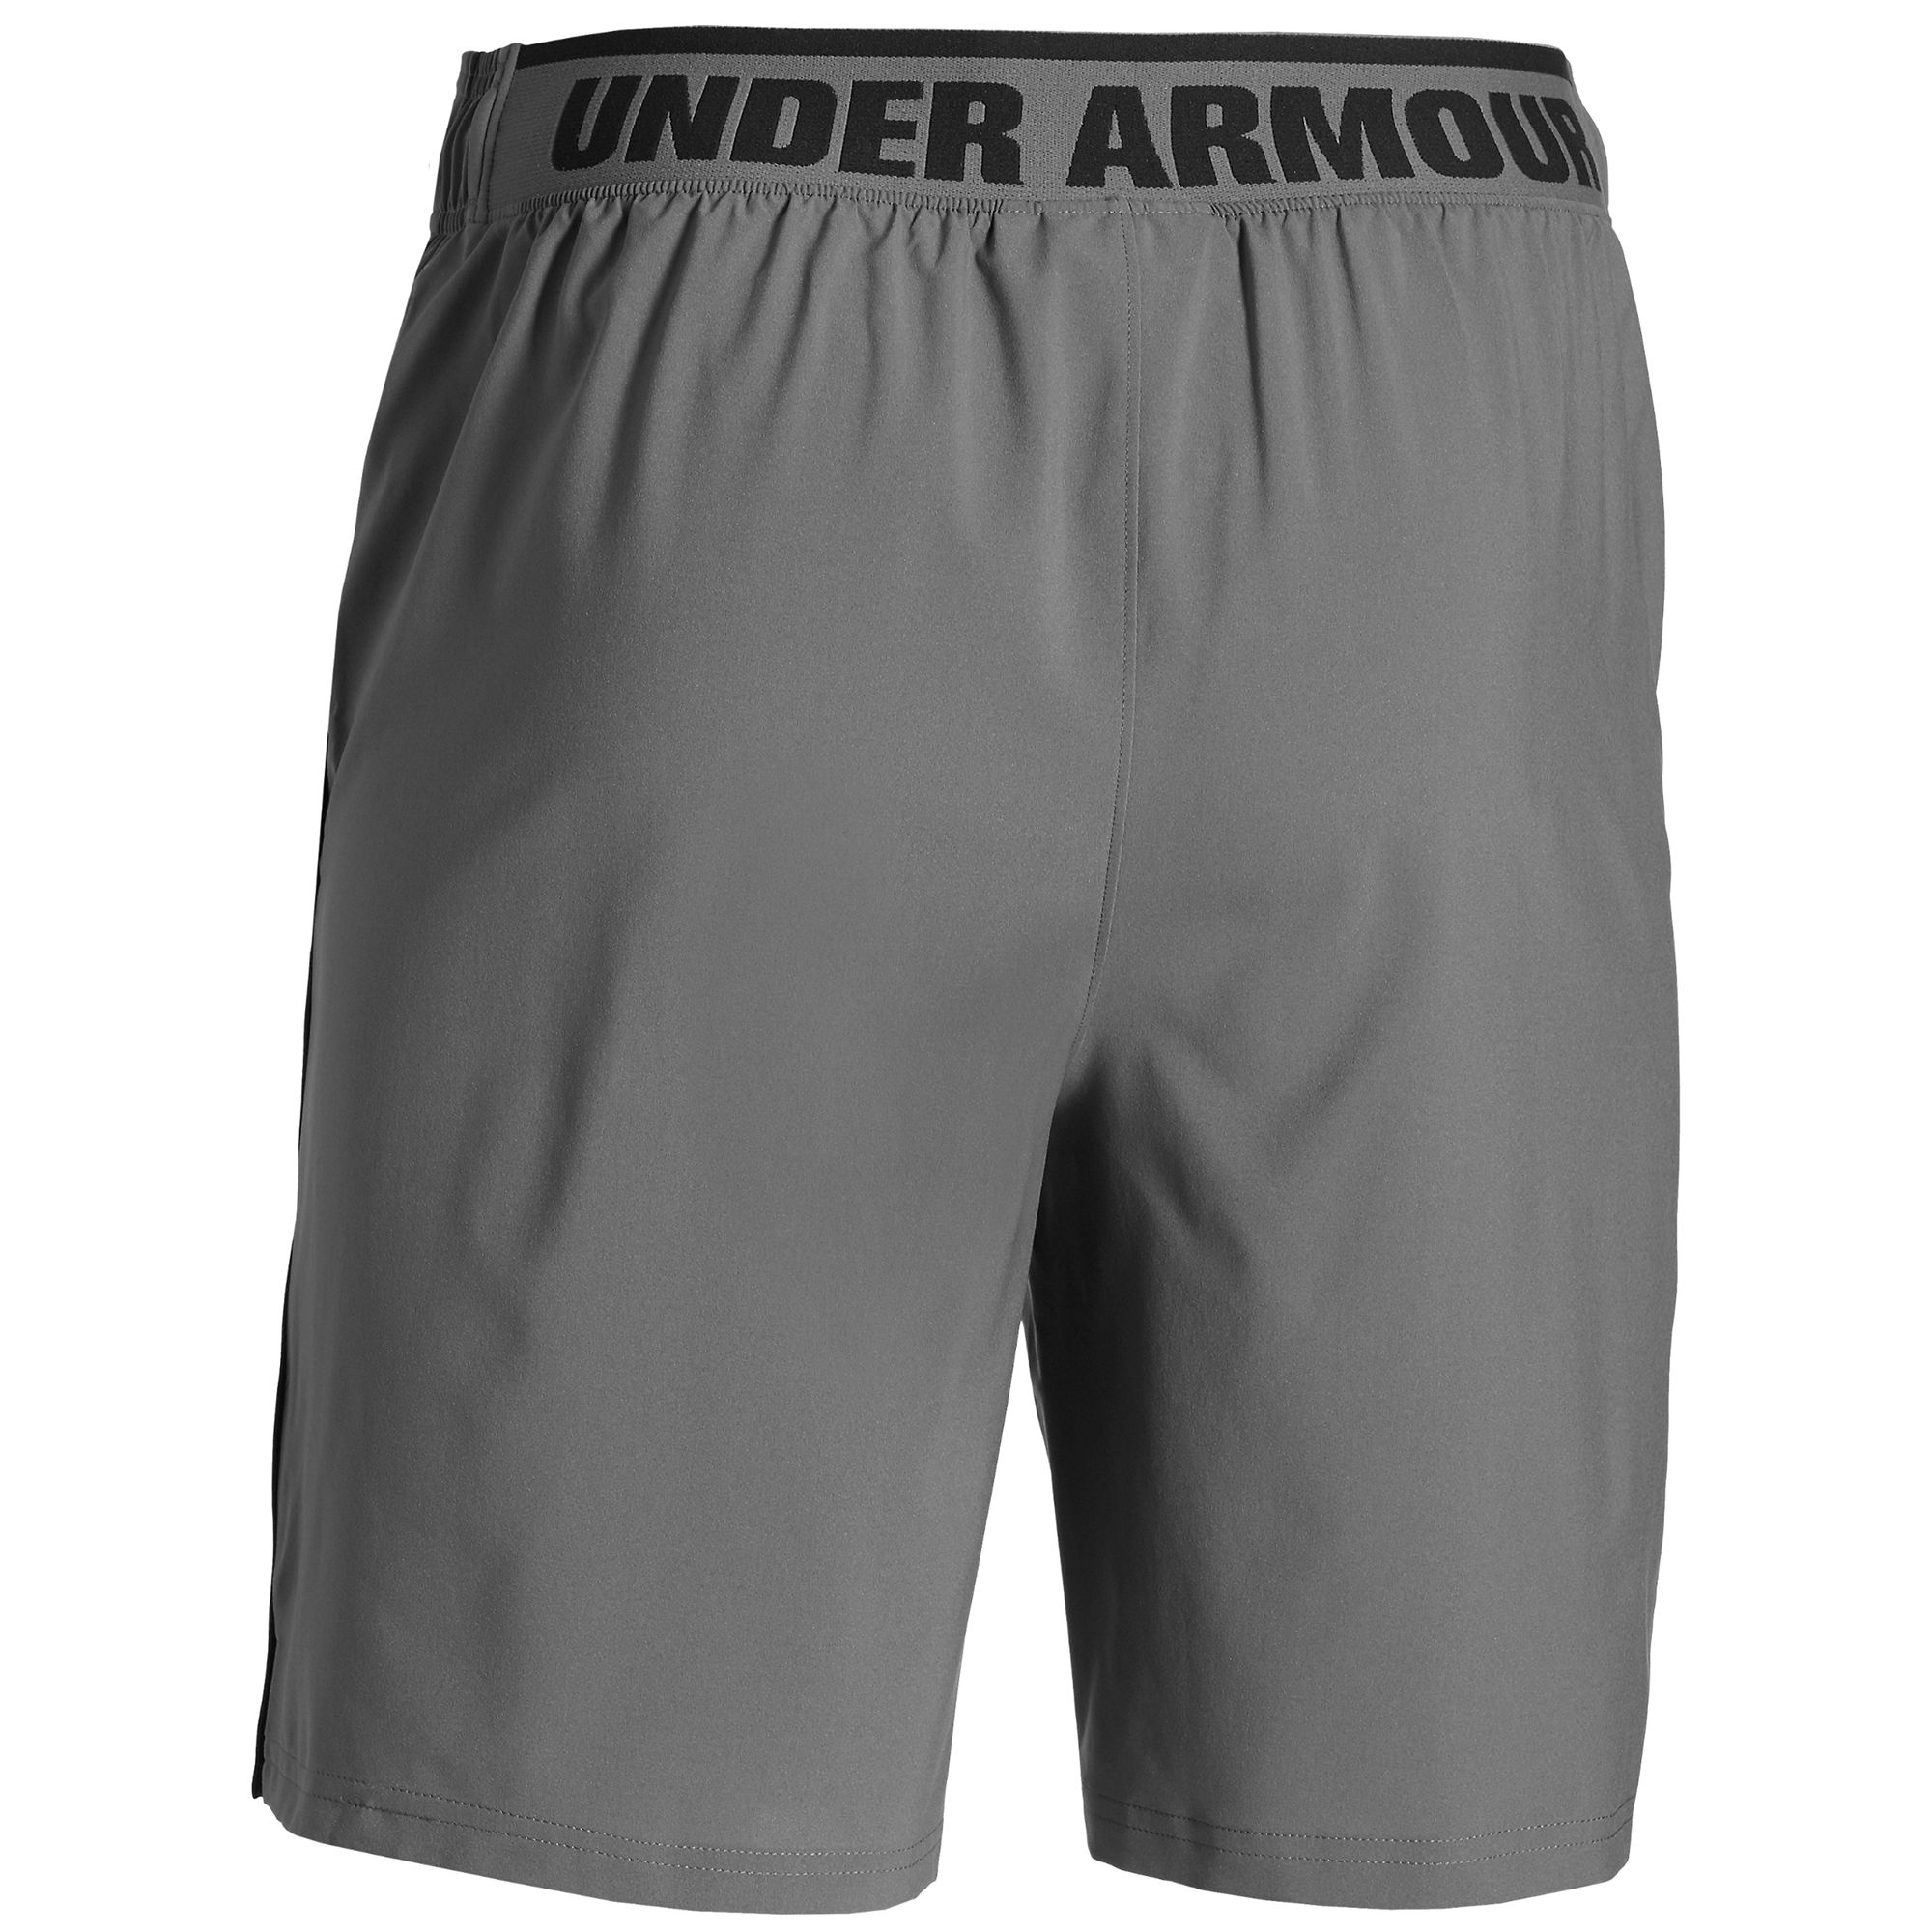 under armour shorts mirage